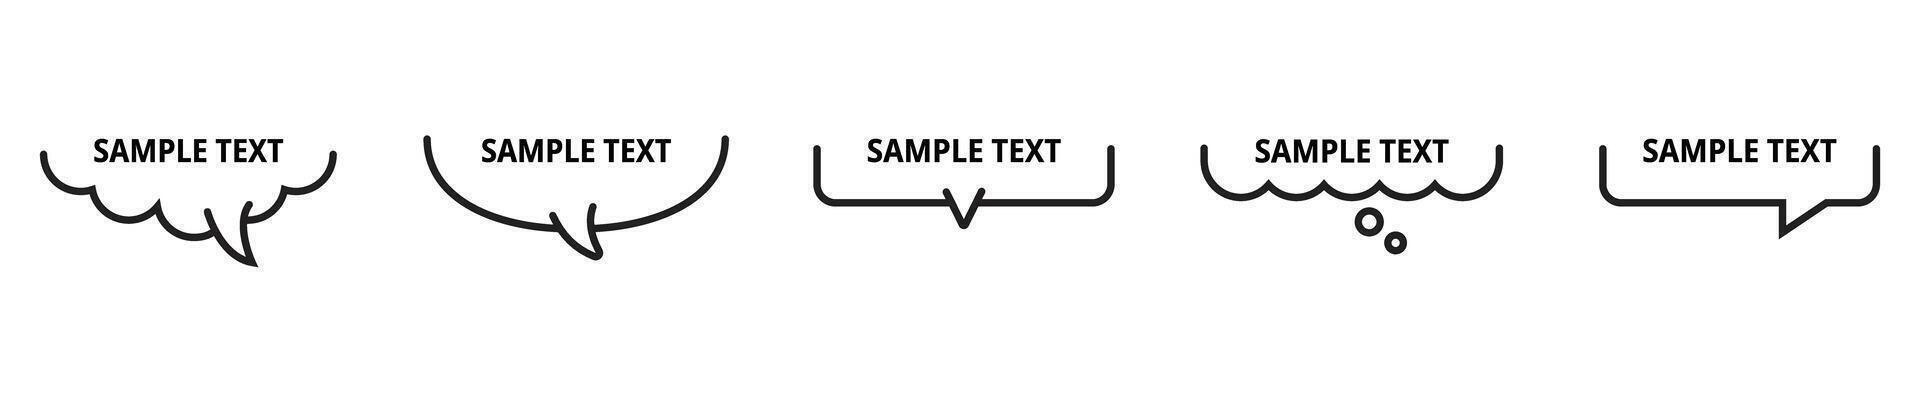 sencillo marco para texto medio buble charla linda forma vector